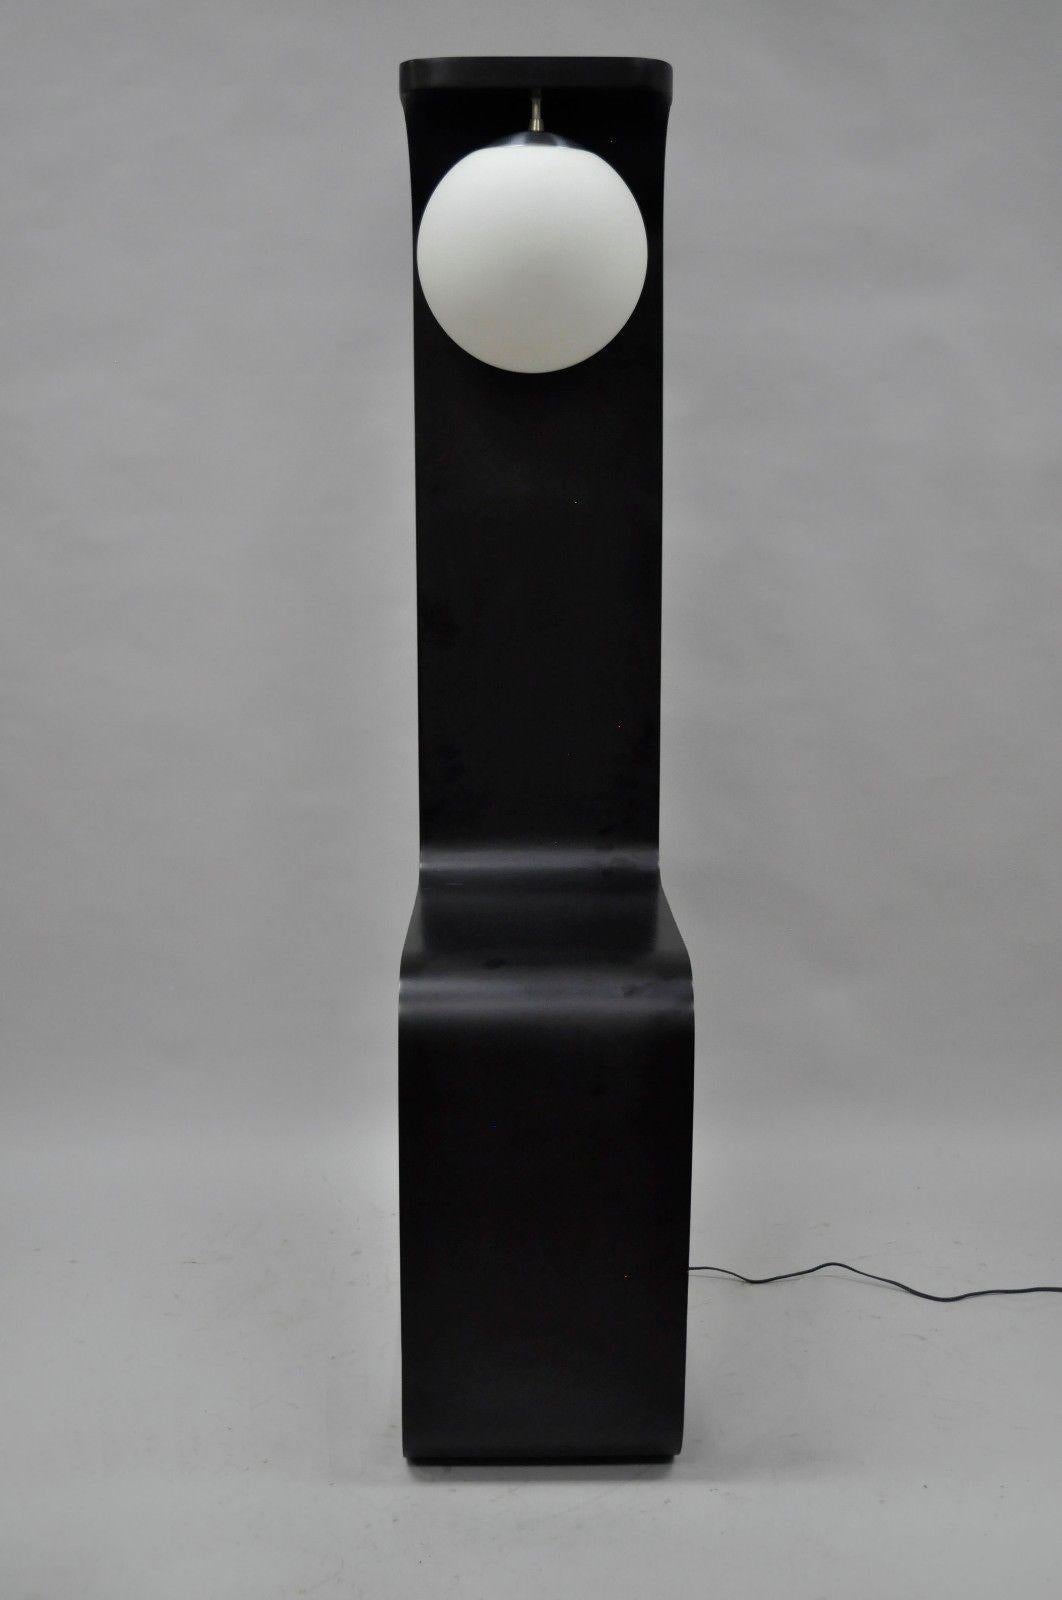 American Mid-Century Modern Sculptural Black Chrome Floor Lamp Attributed to Modeline